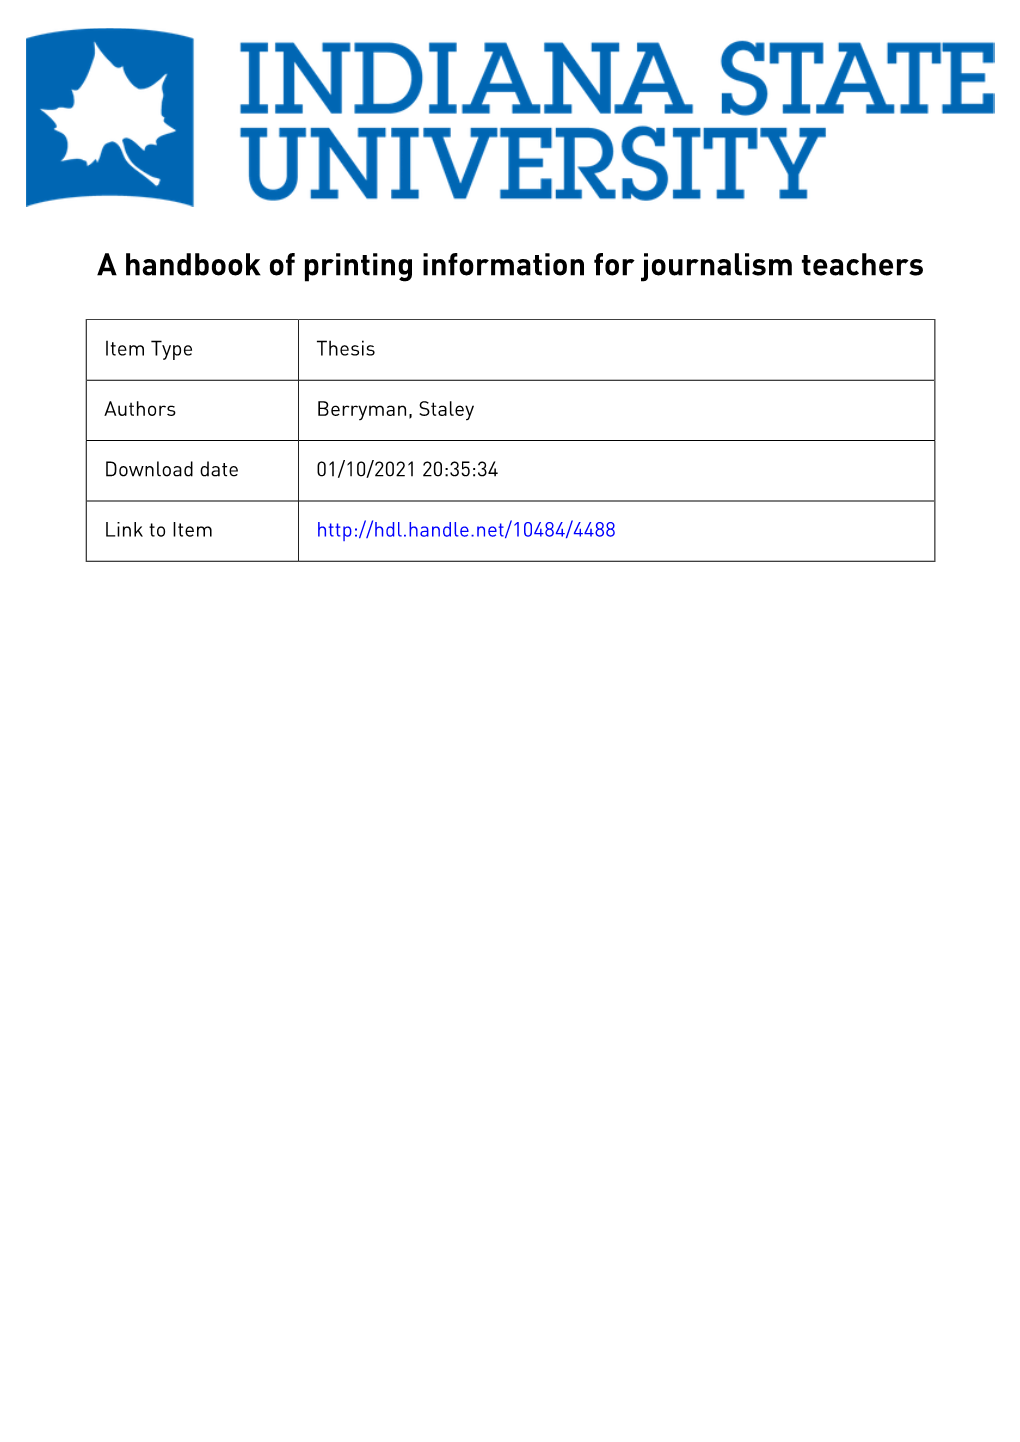 A Handbook of Printing Information for Journalism Teachers